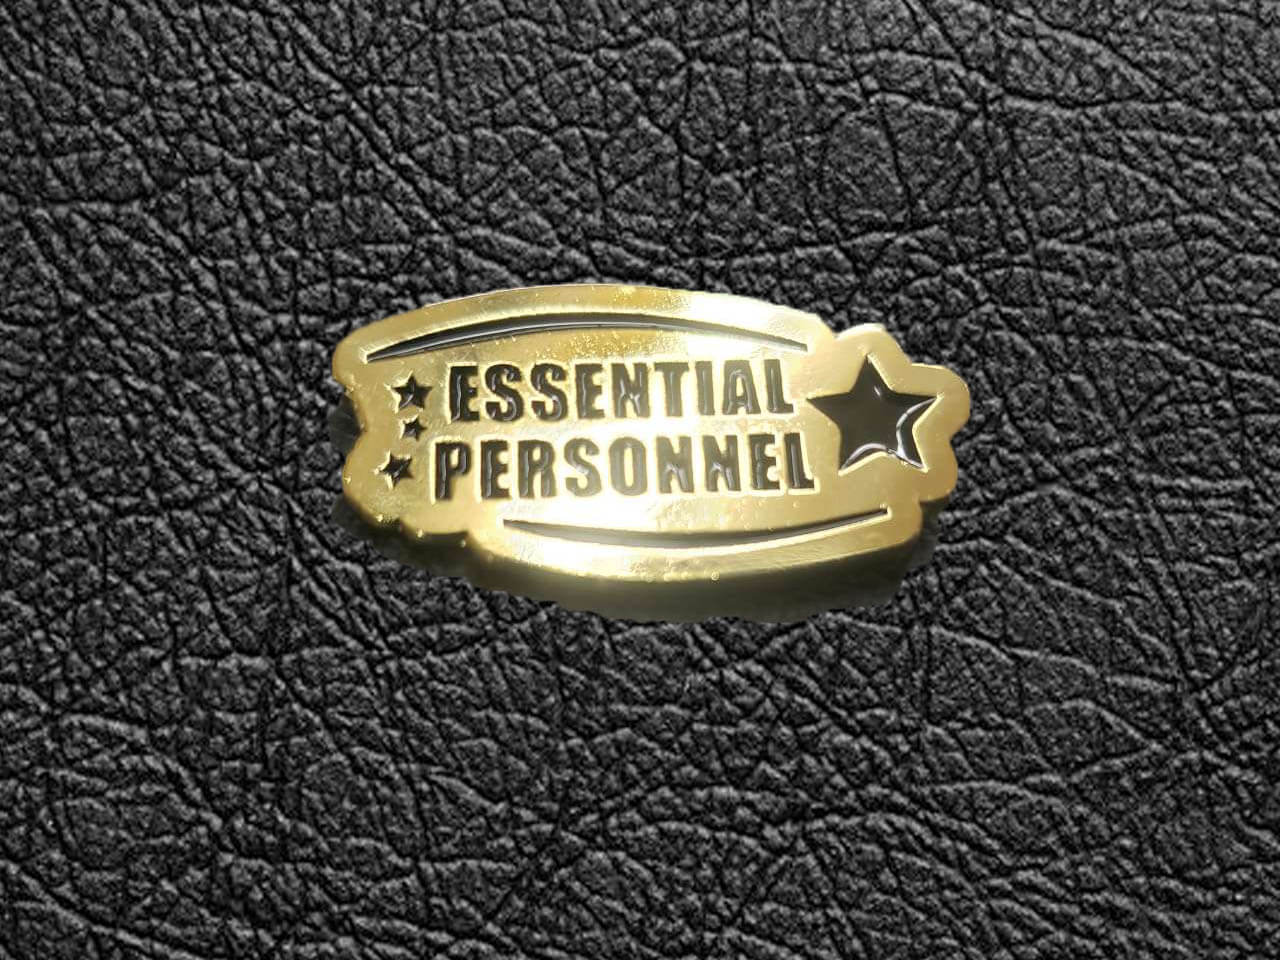 Essential Personnel Enamel Pin 5